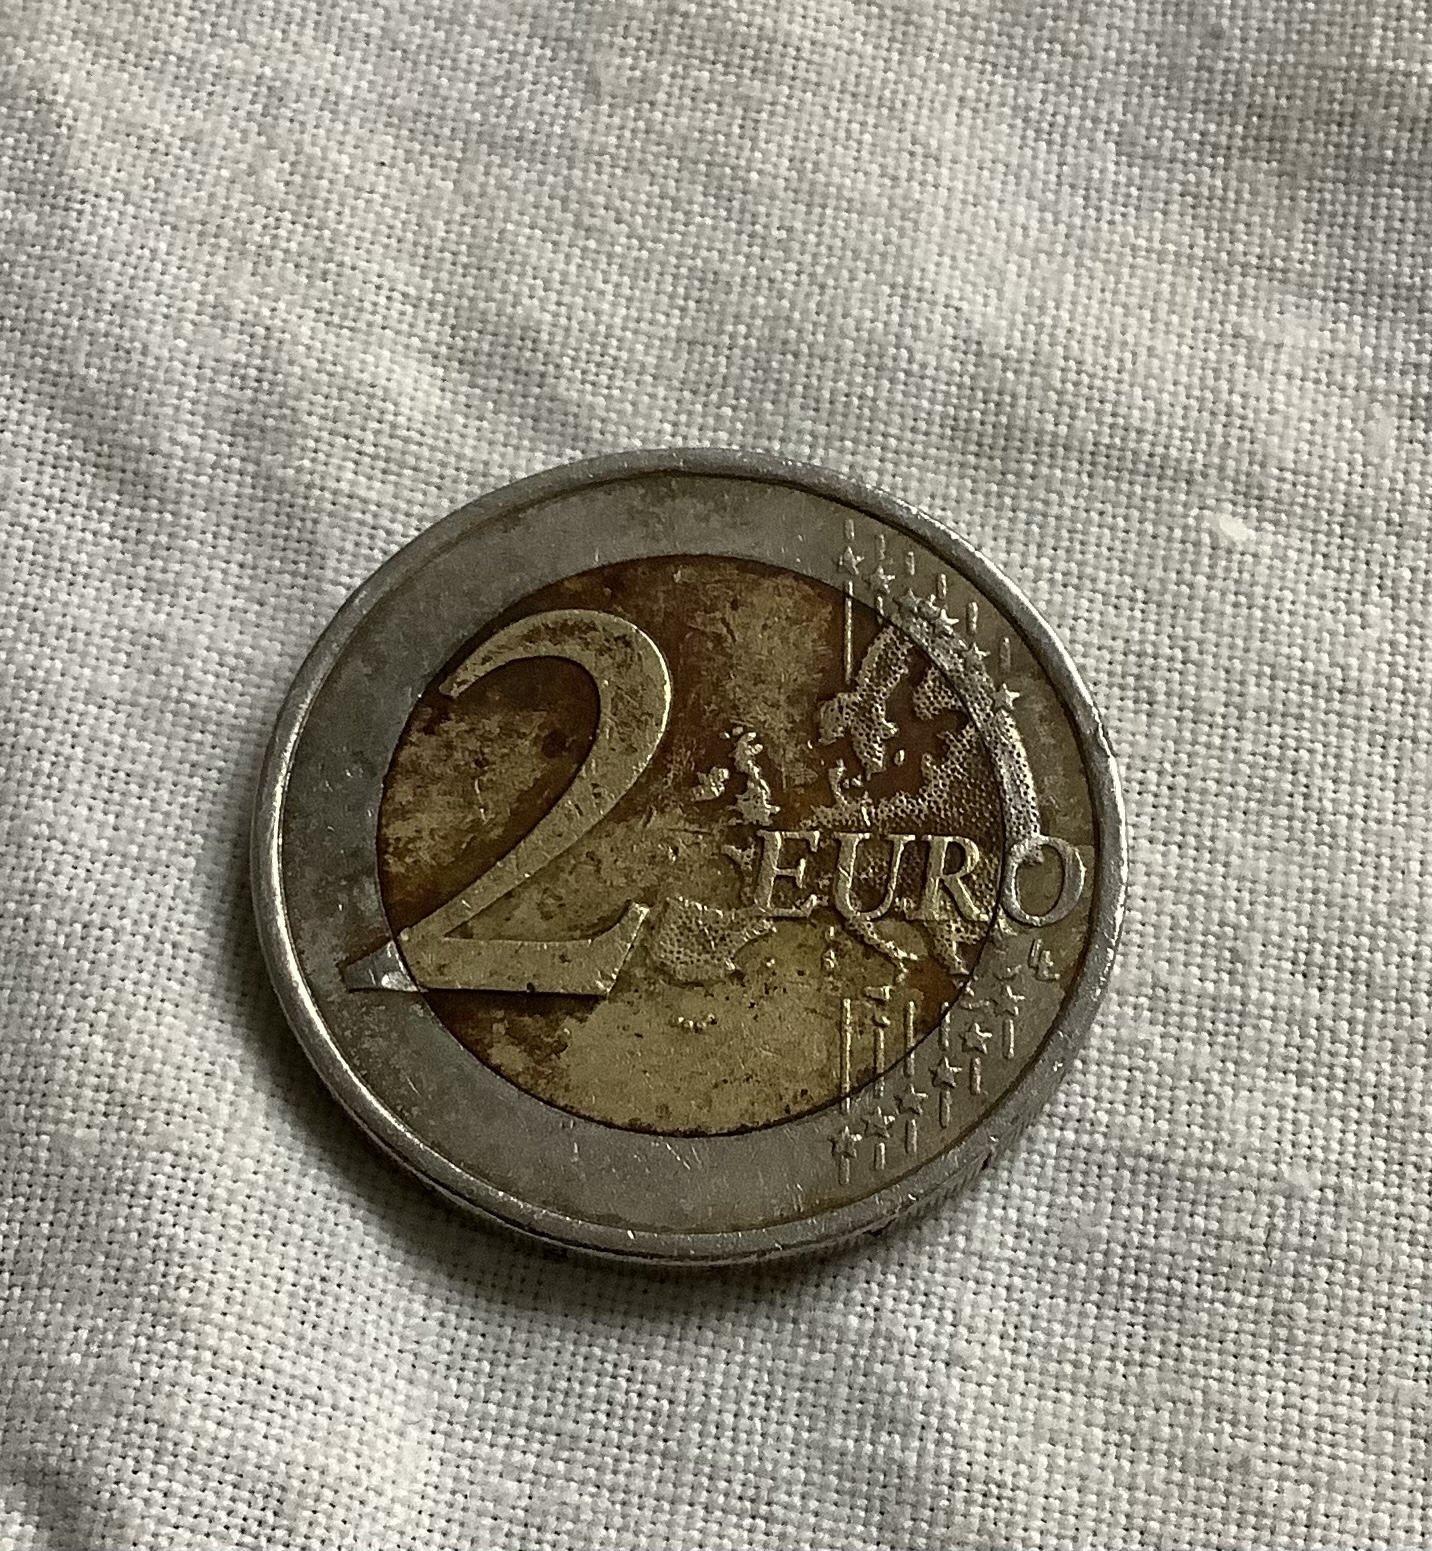 Misprint coin / Fehlpreagung Europa 2 Euro 2008